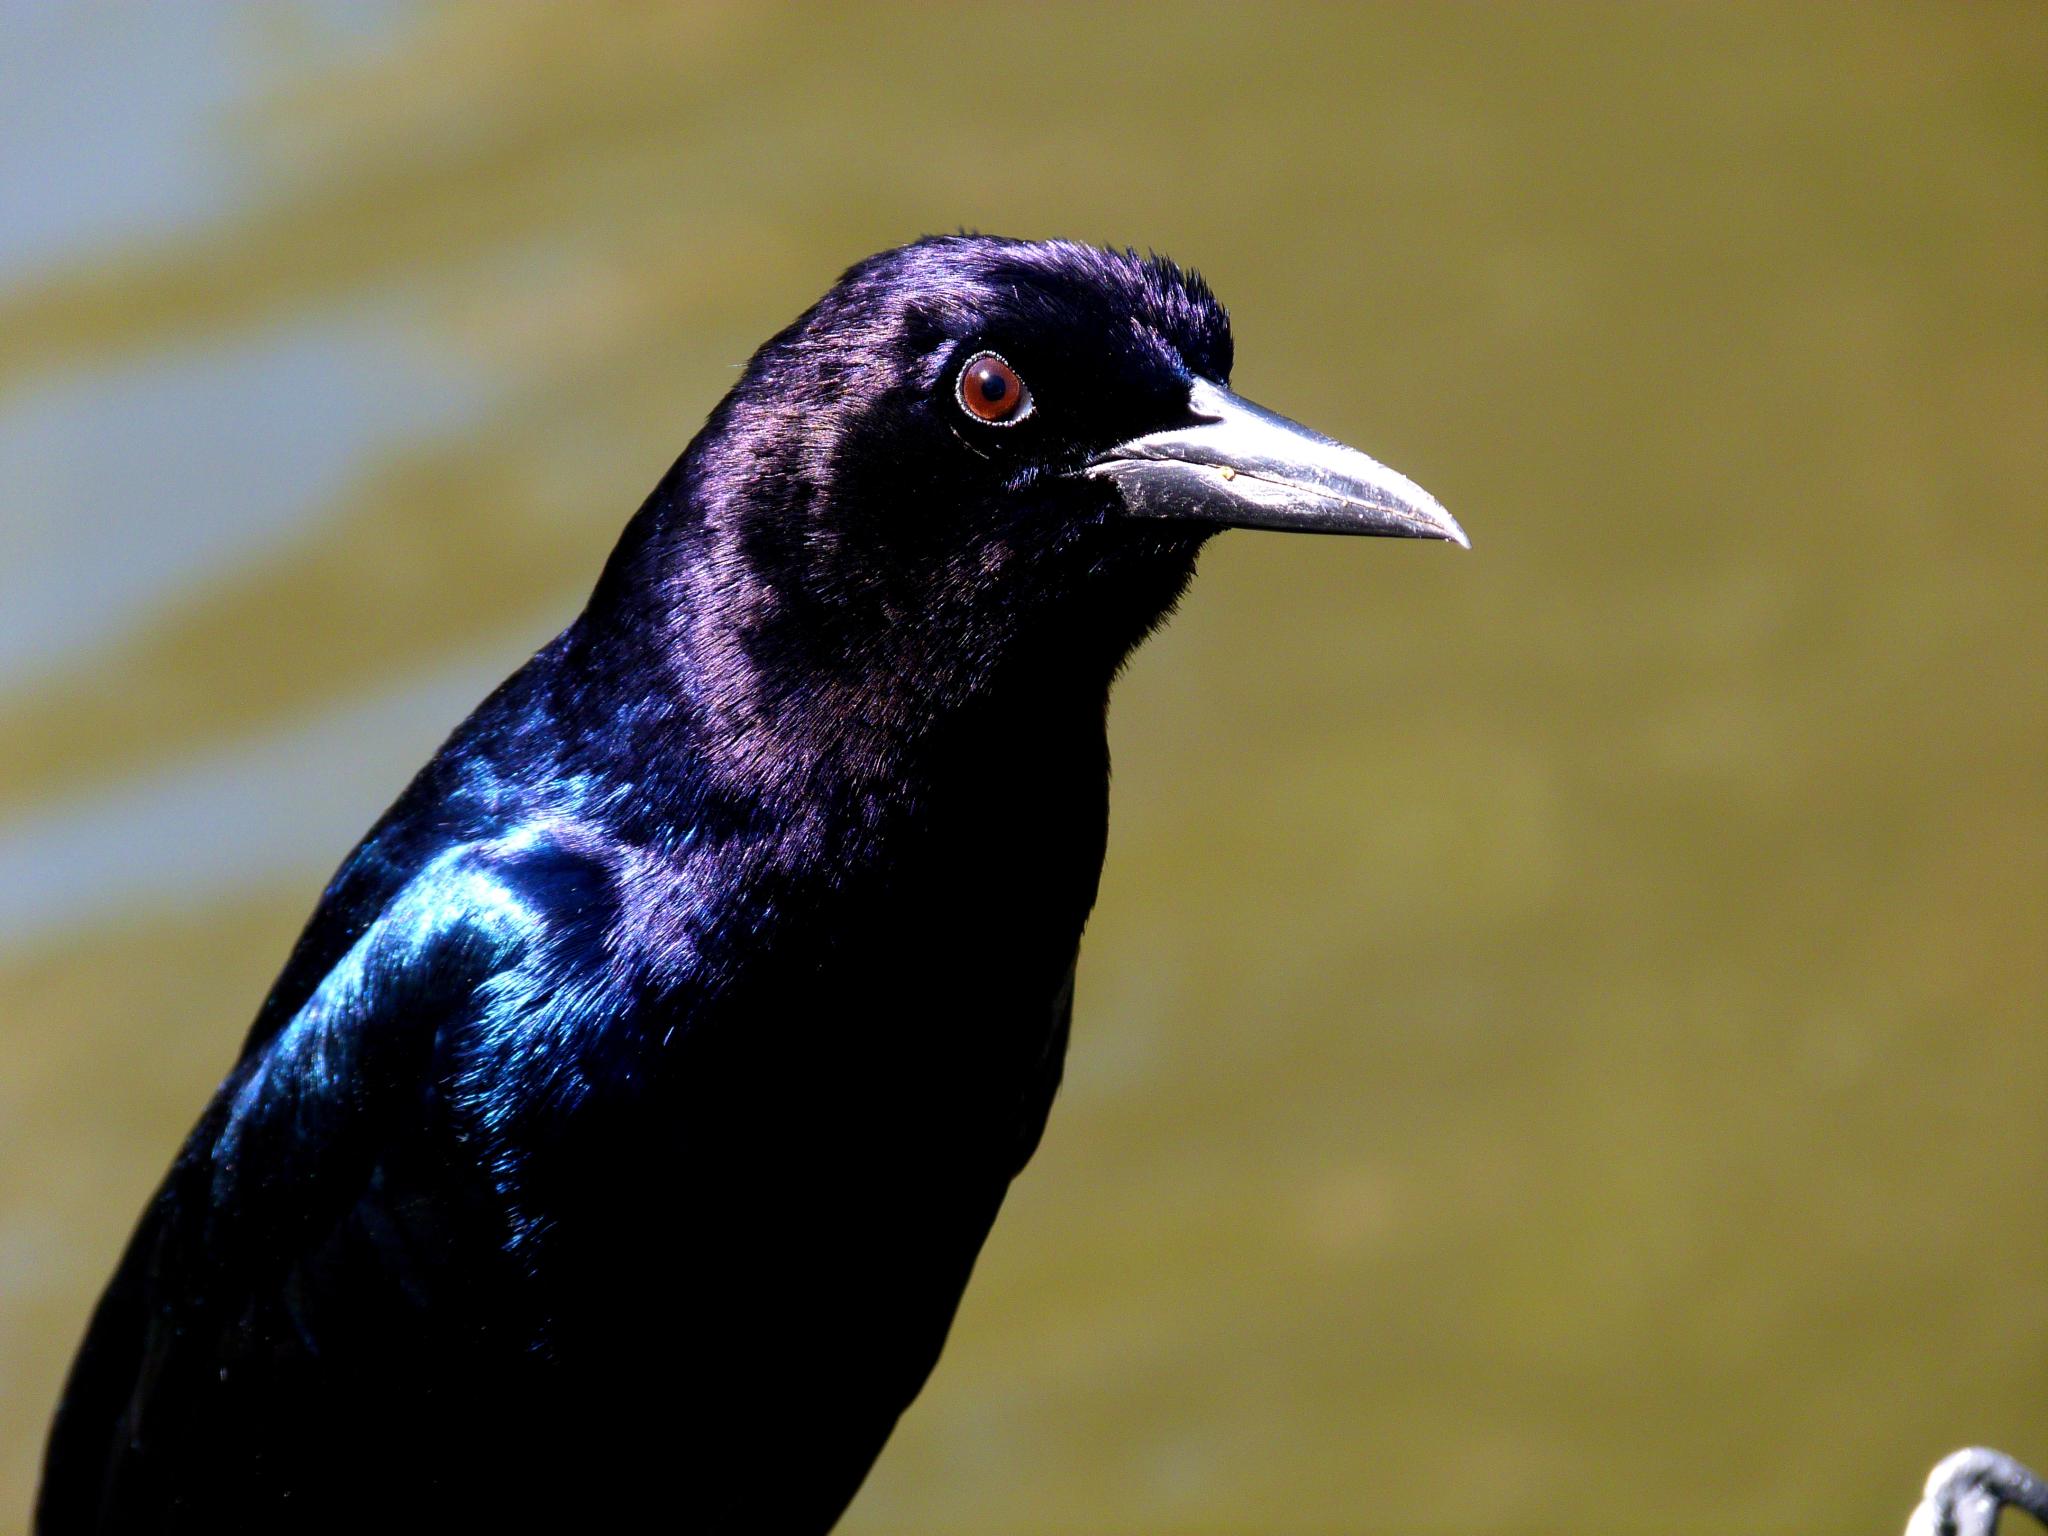 the large black bird has a blue beak